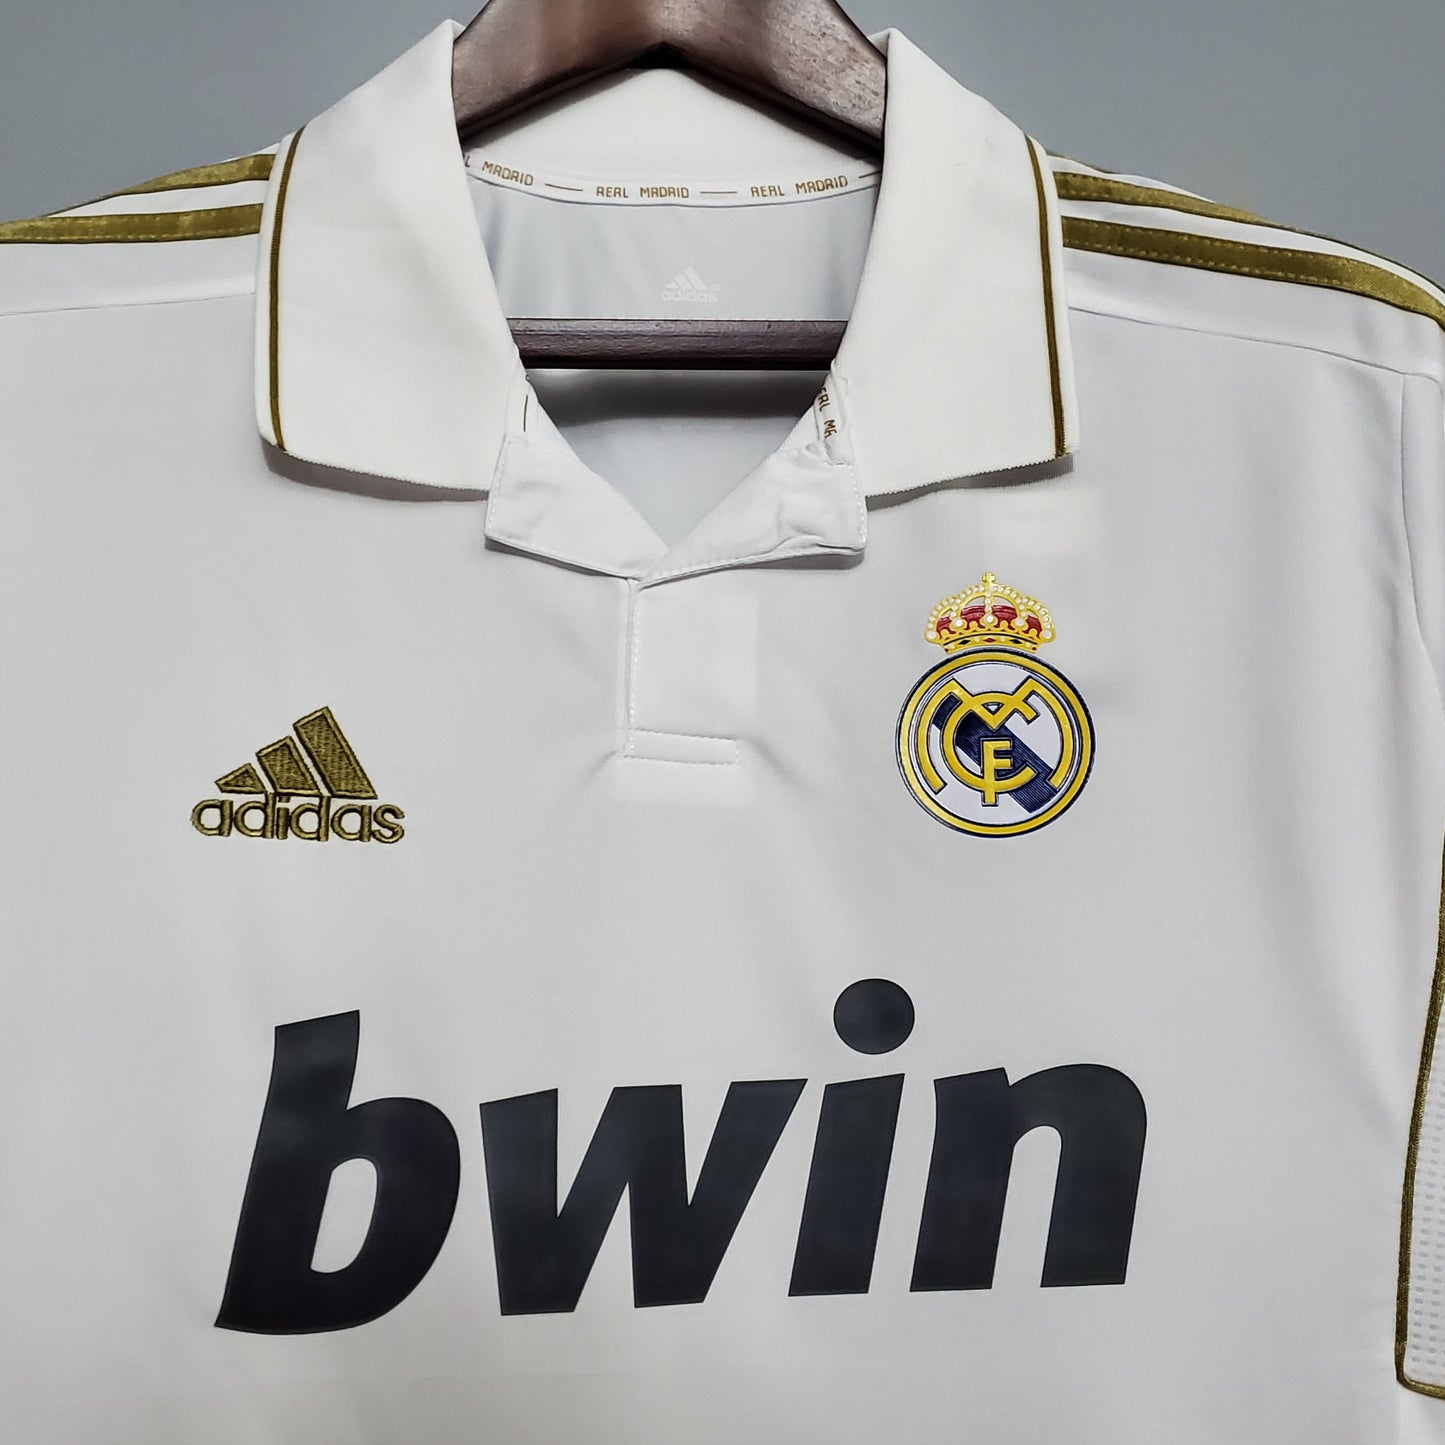 Real Madrid 11/12 Home Kit